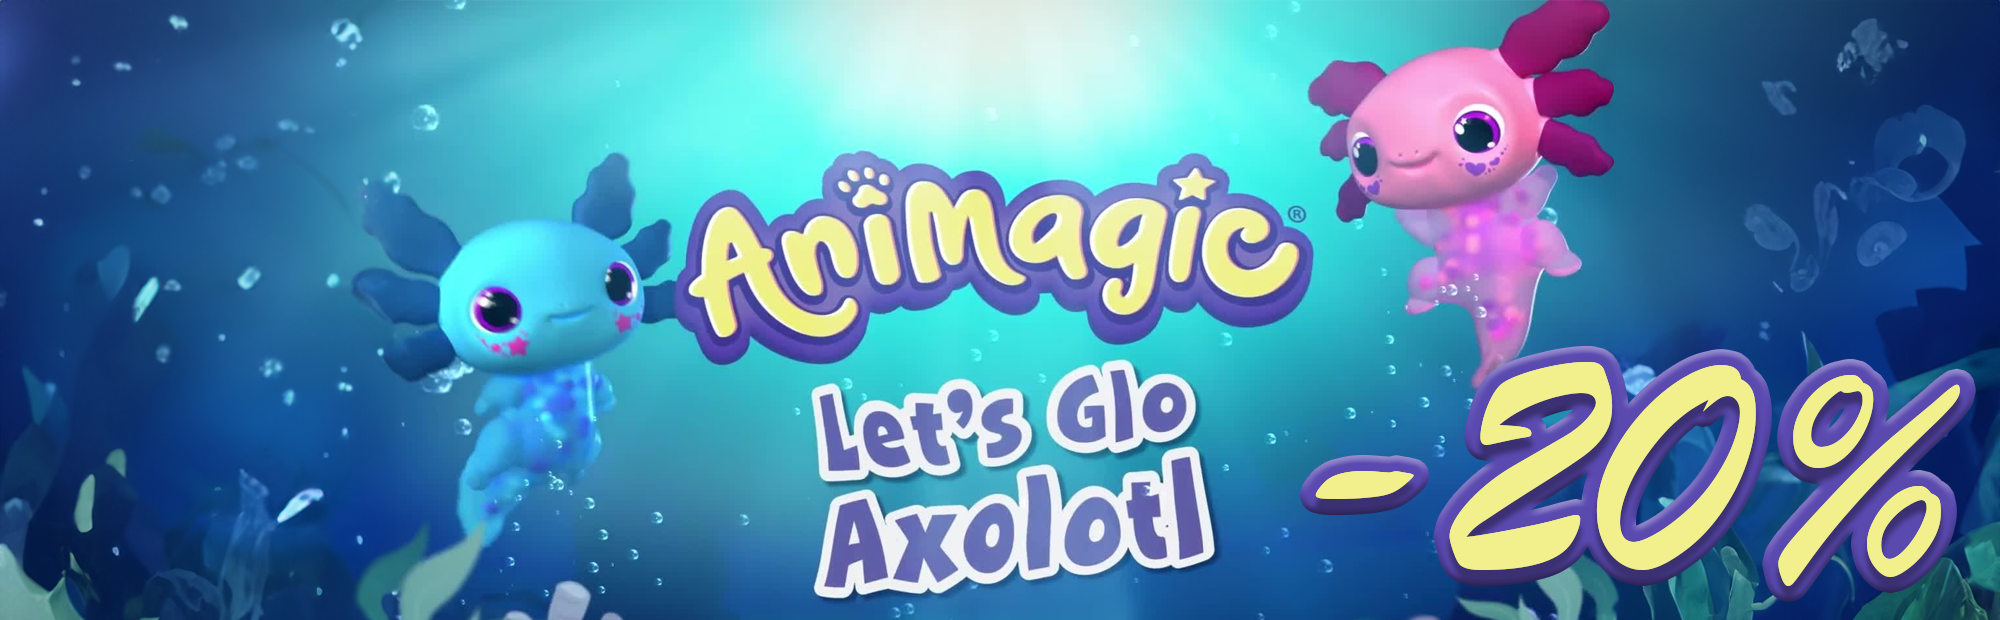 Banner Goliath - Unleash the magic of Animagic Axolotl